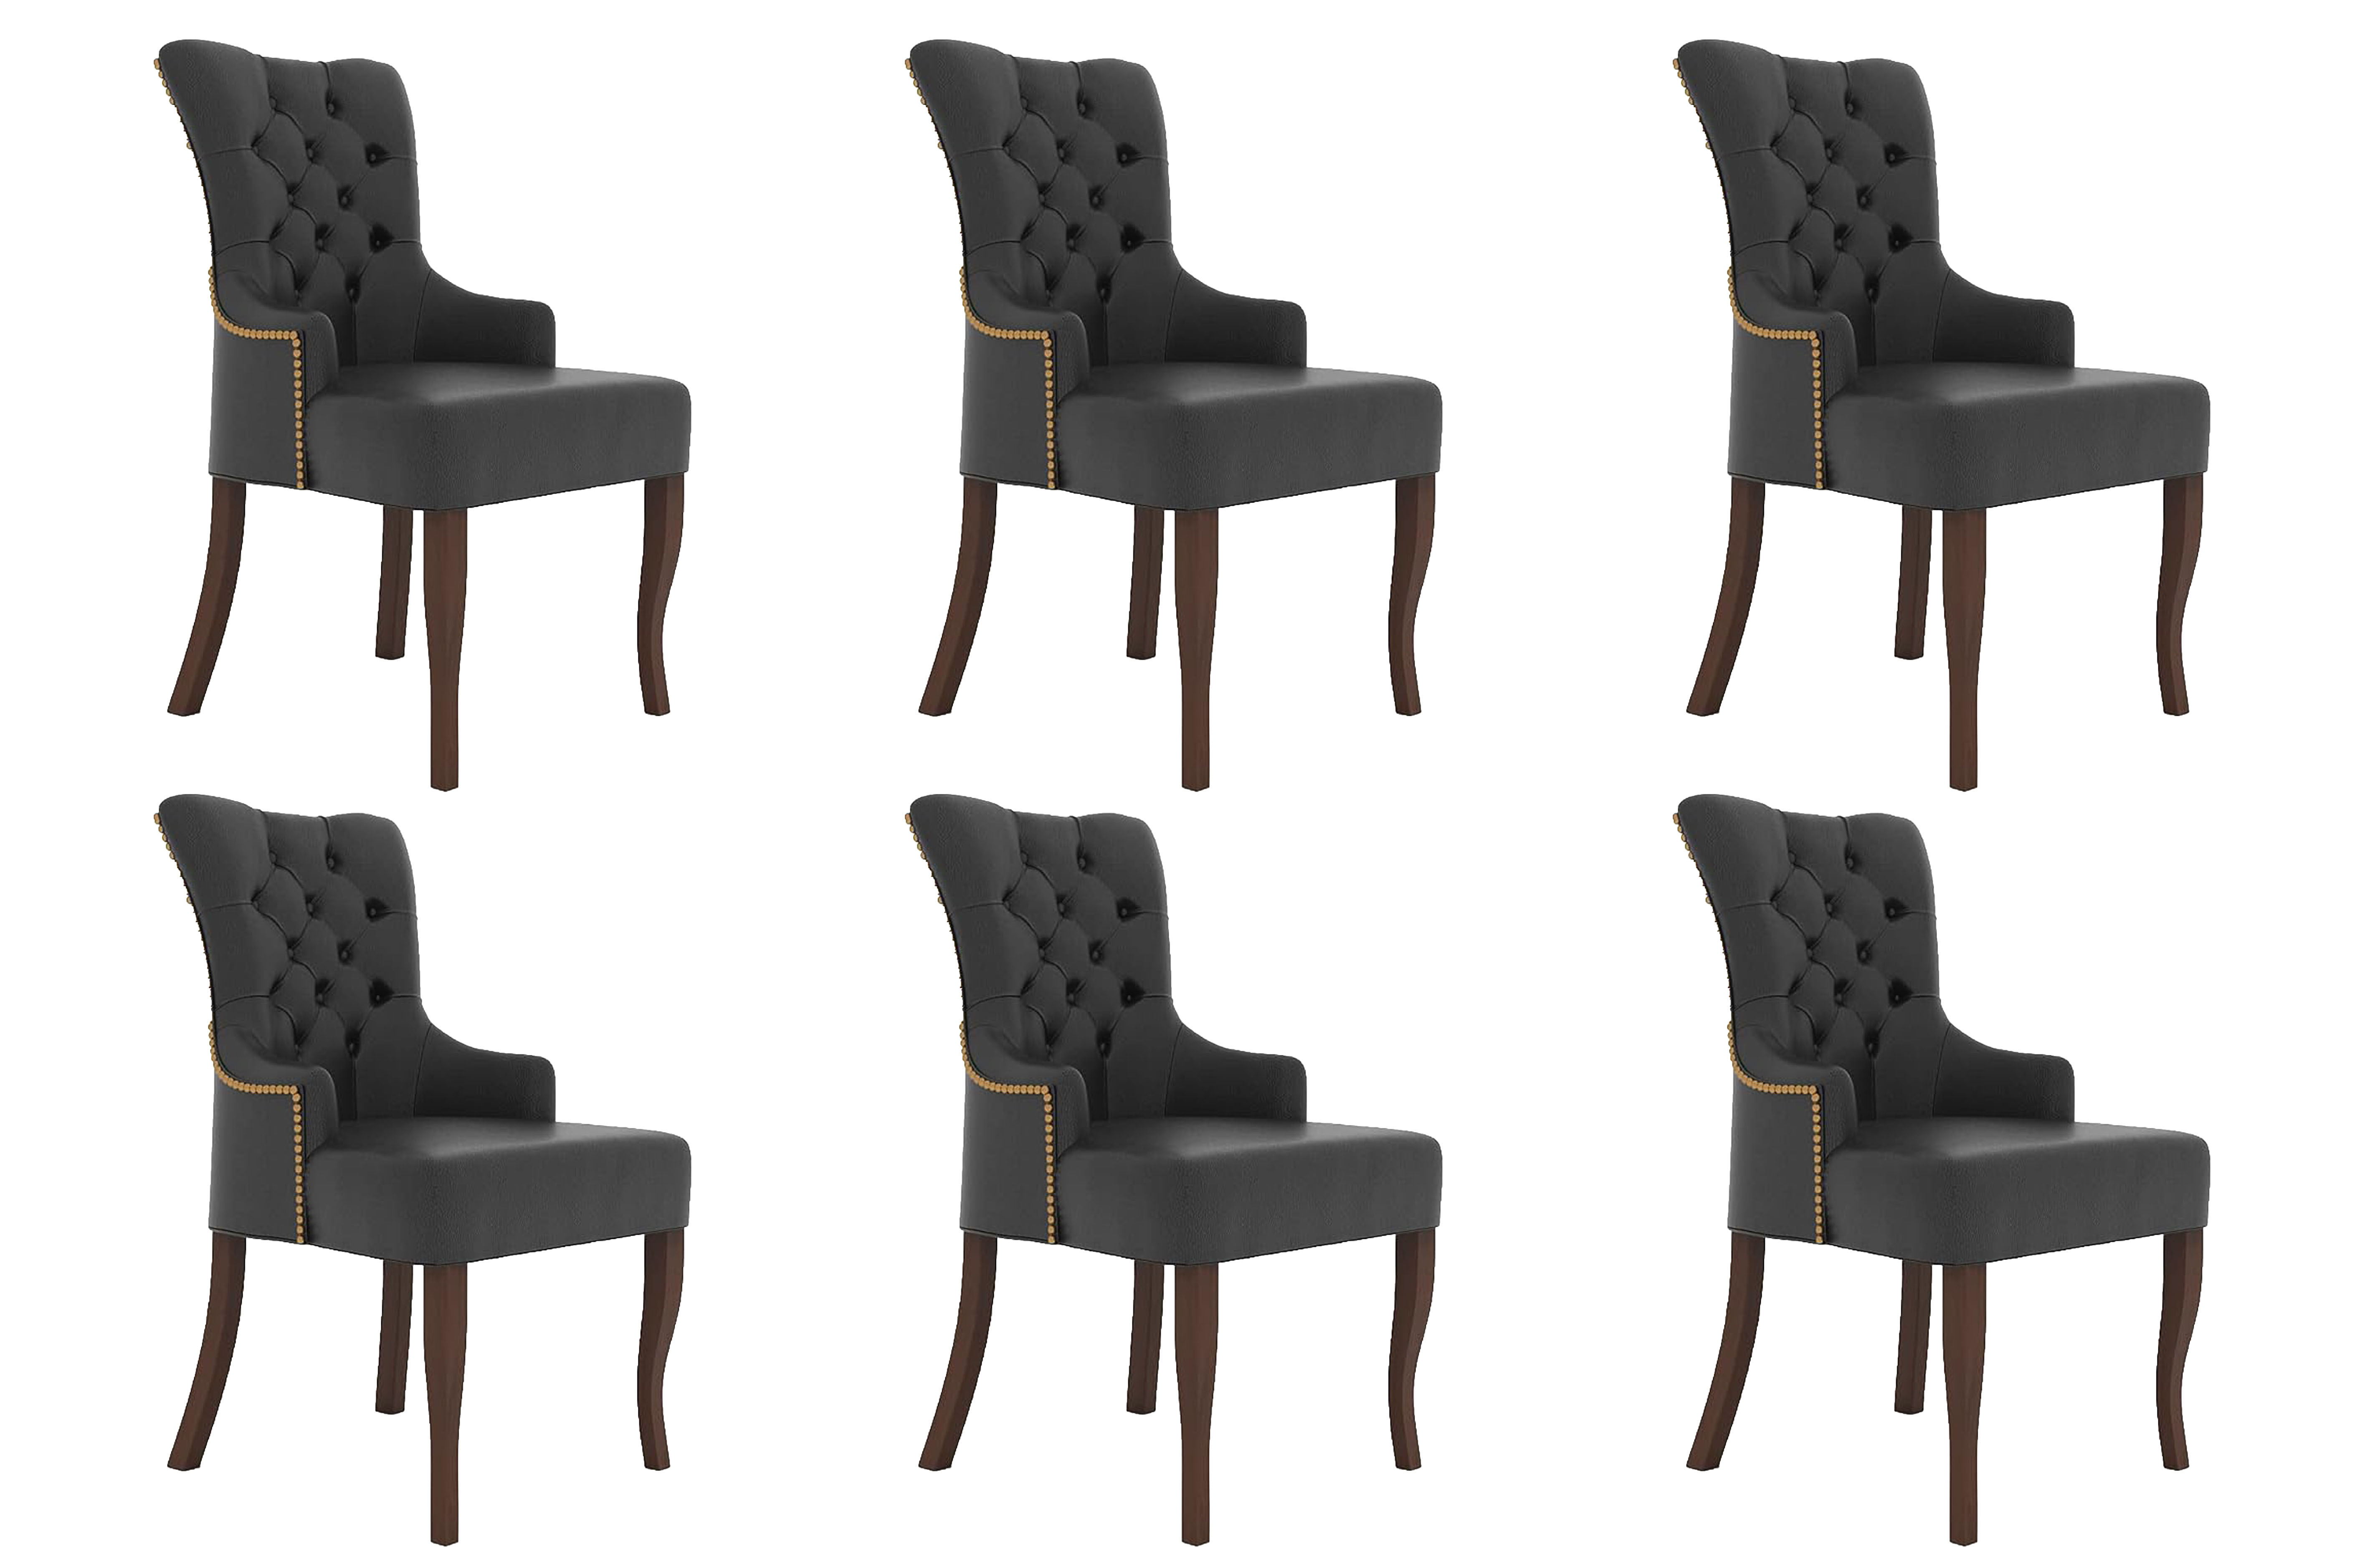 Dynamo black dining chair (set of 6)